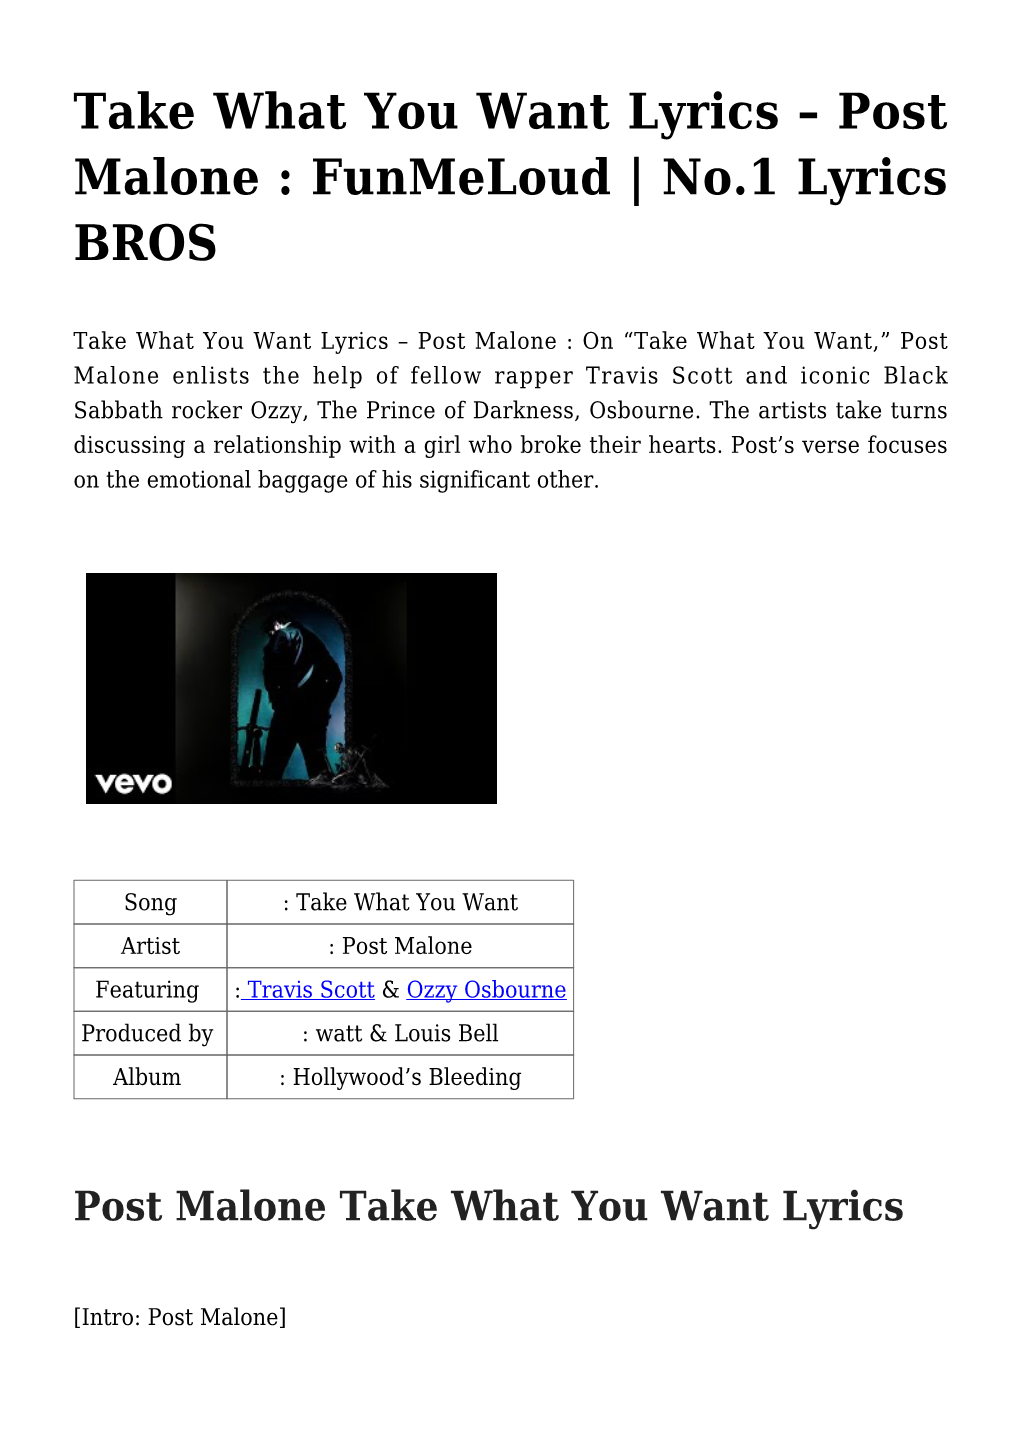 Post Malone : Funmeloud | No.1 Lyrics BROS